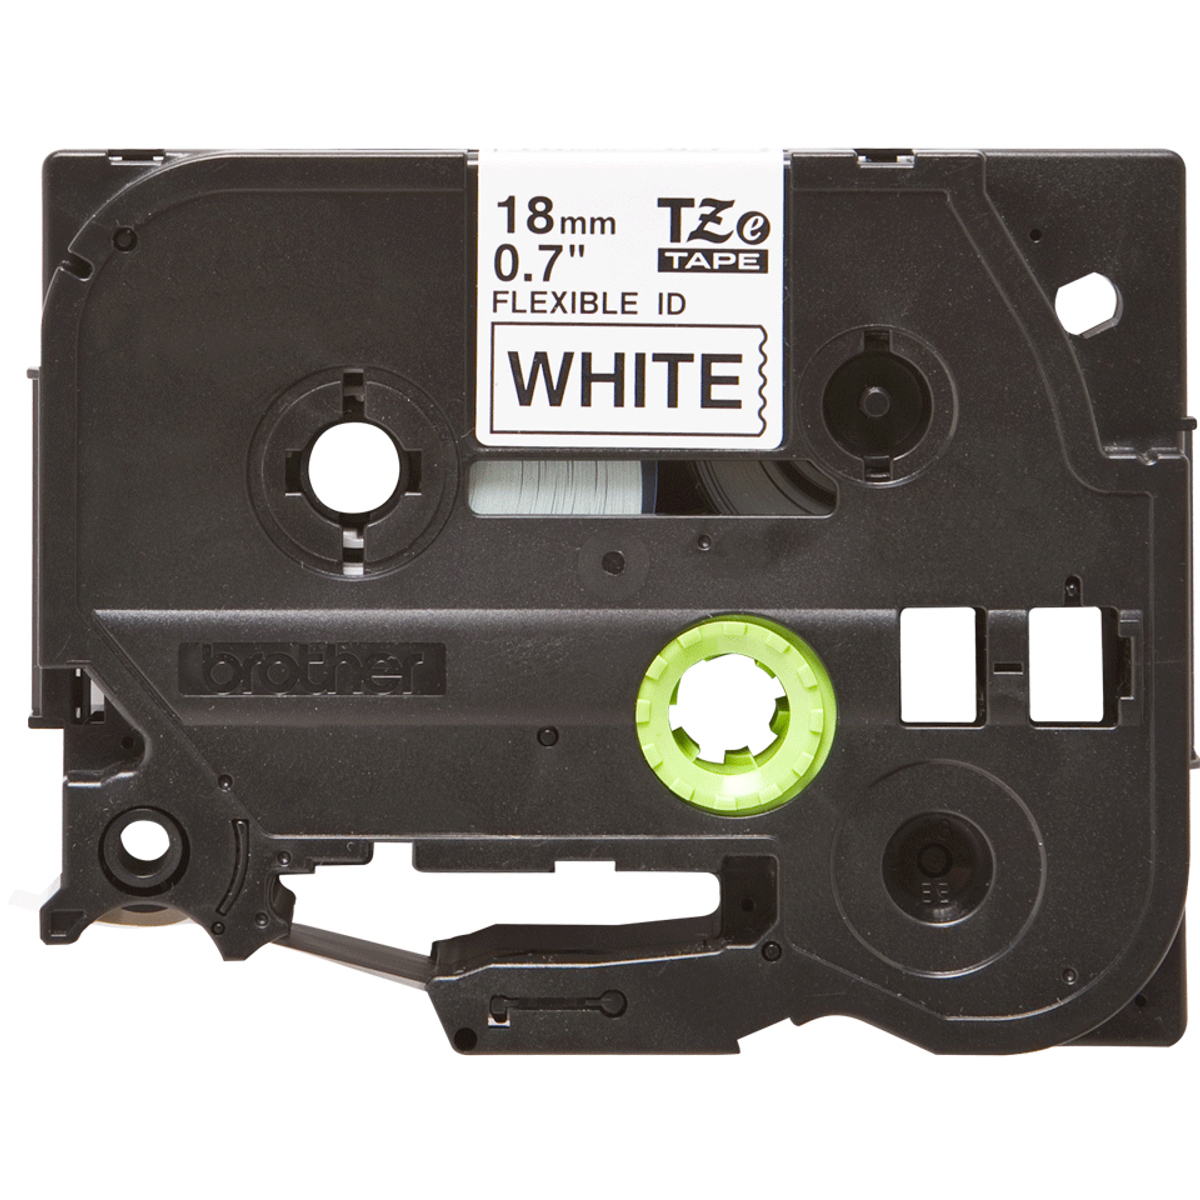 TZEFX241 18mm Flexi Blk On Wt Label Tape